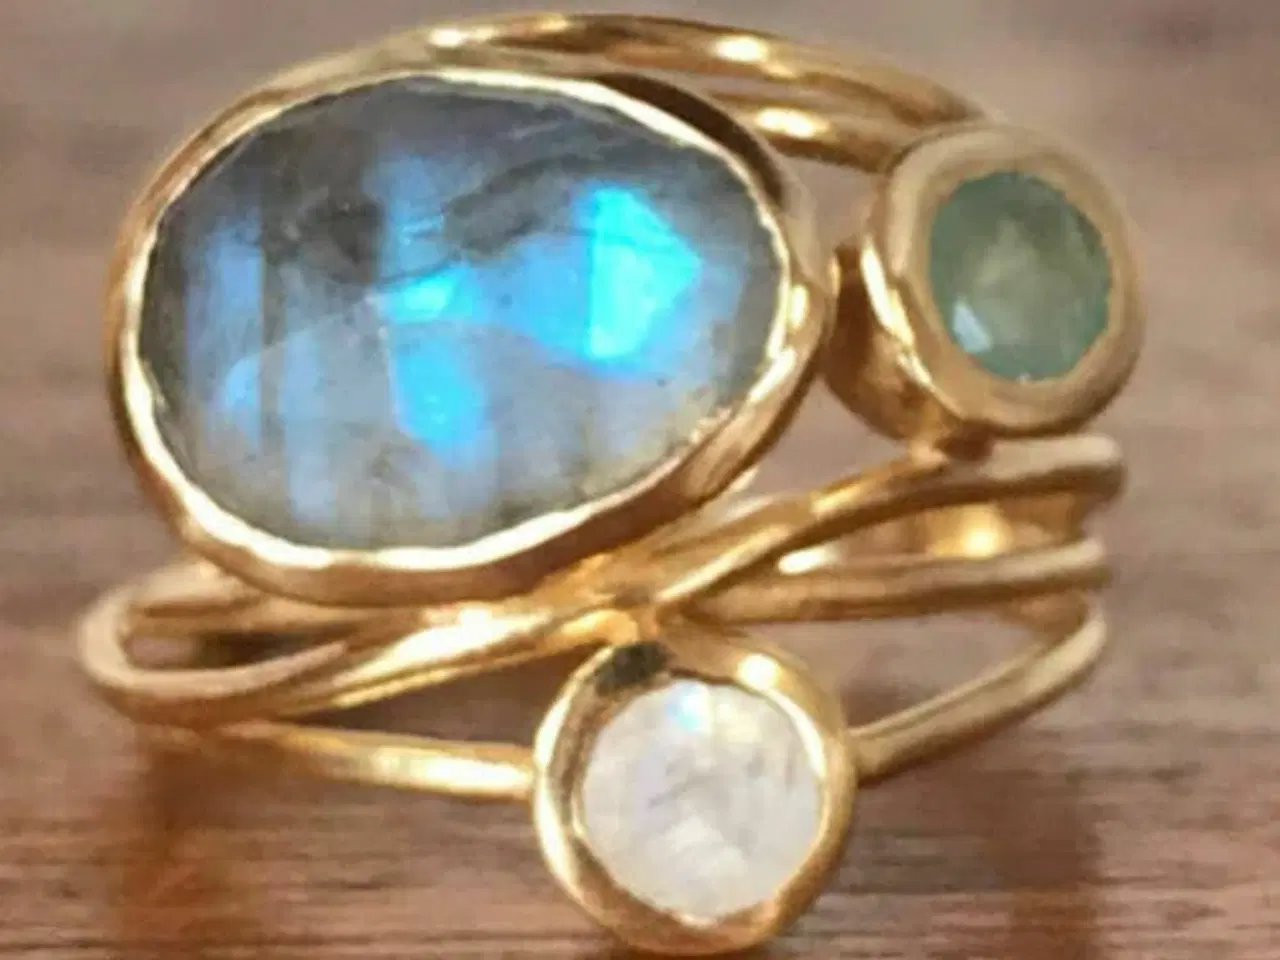 Billede 1 - White and Fire (ild) Opal-og Moon stone Ring